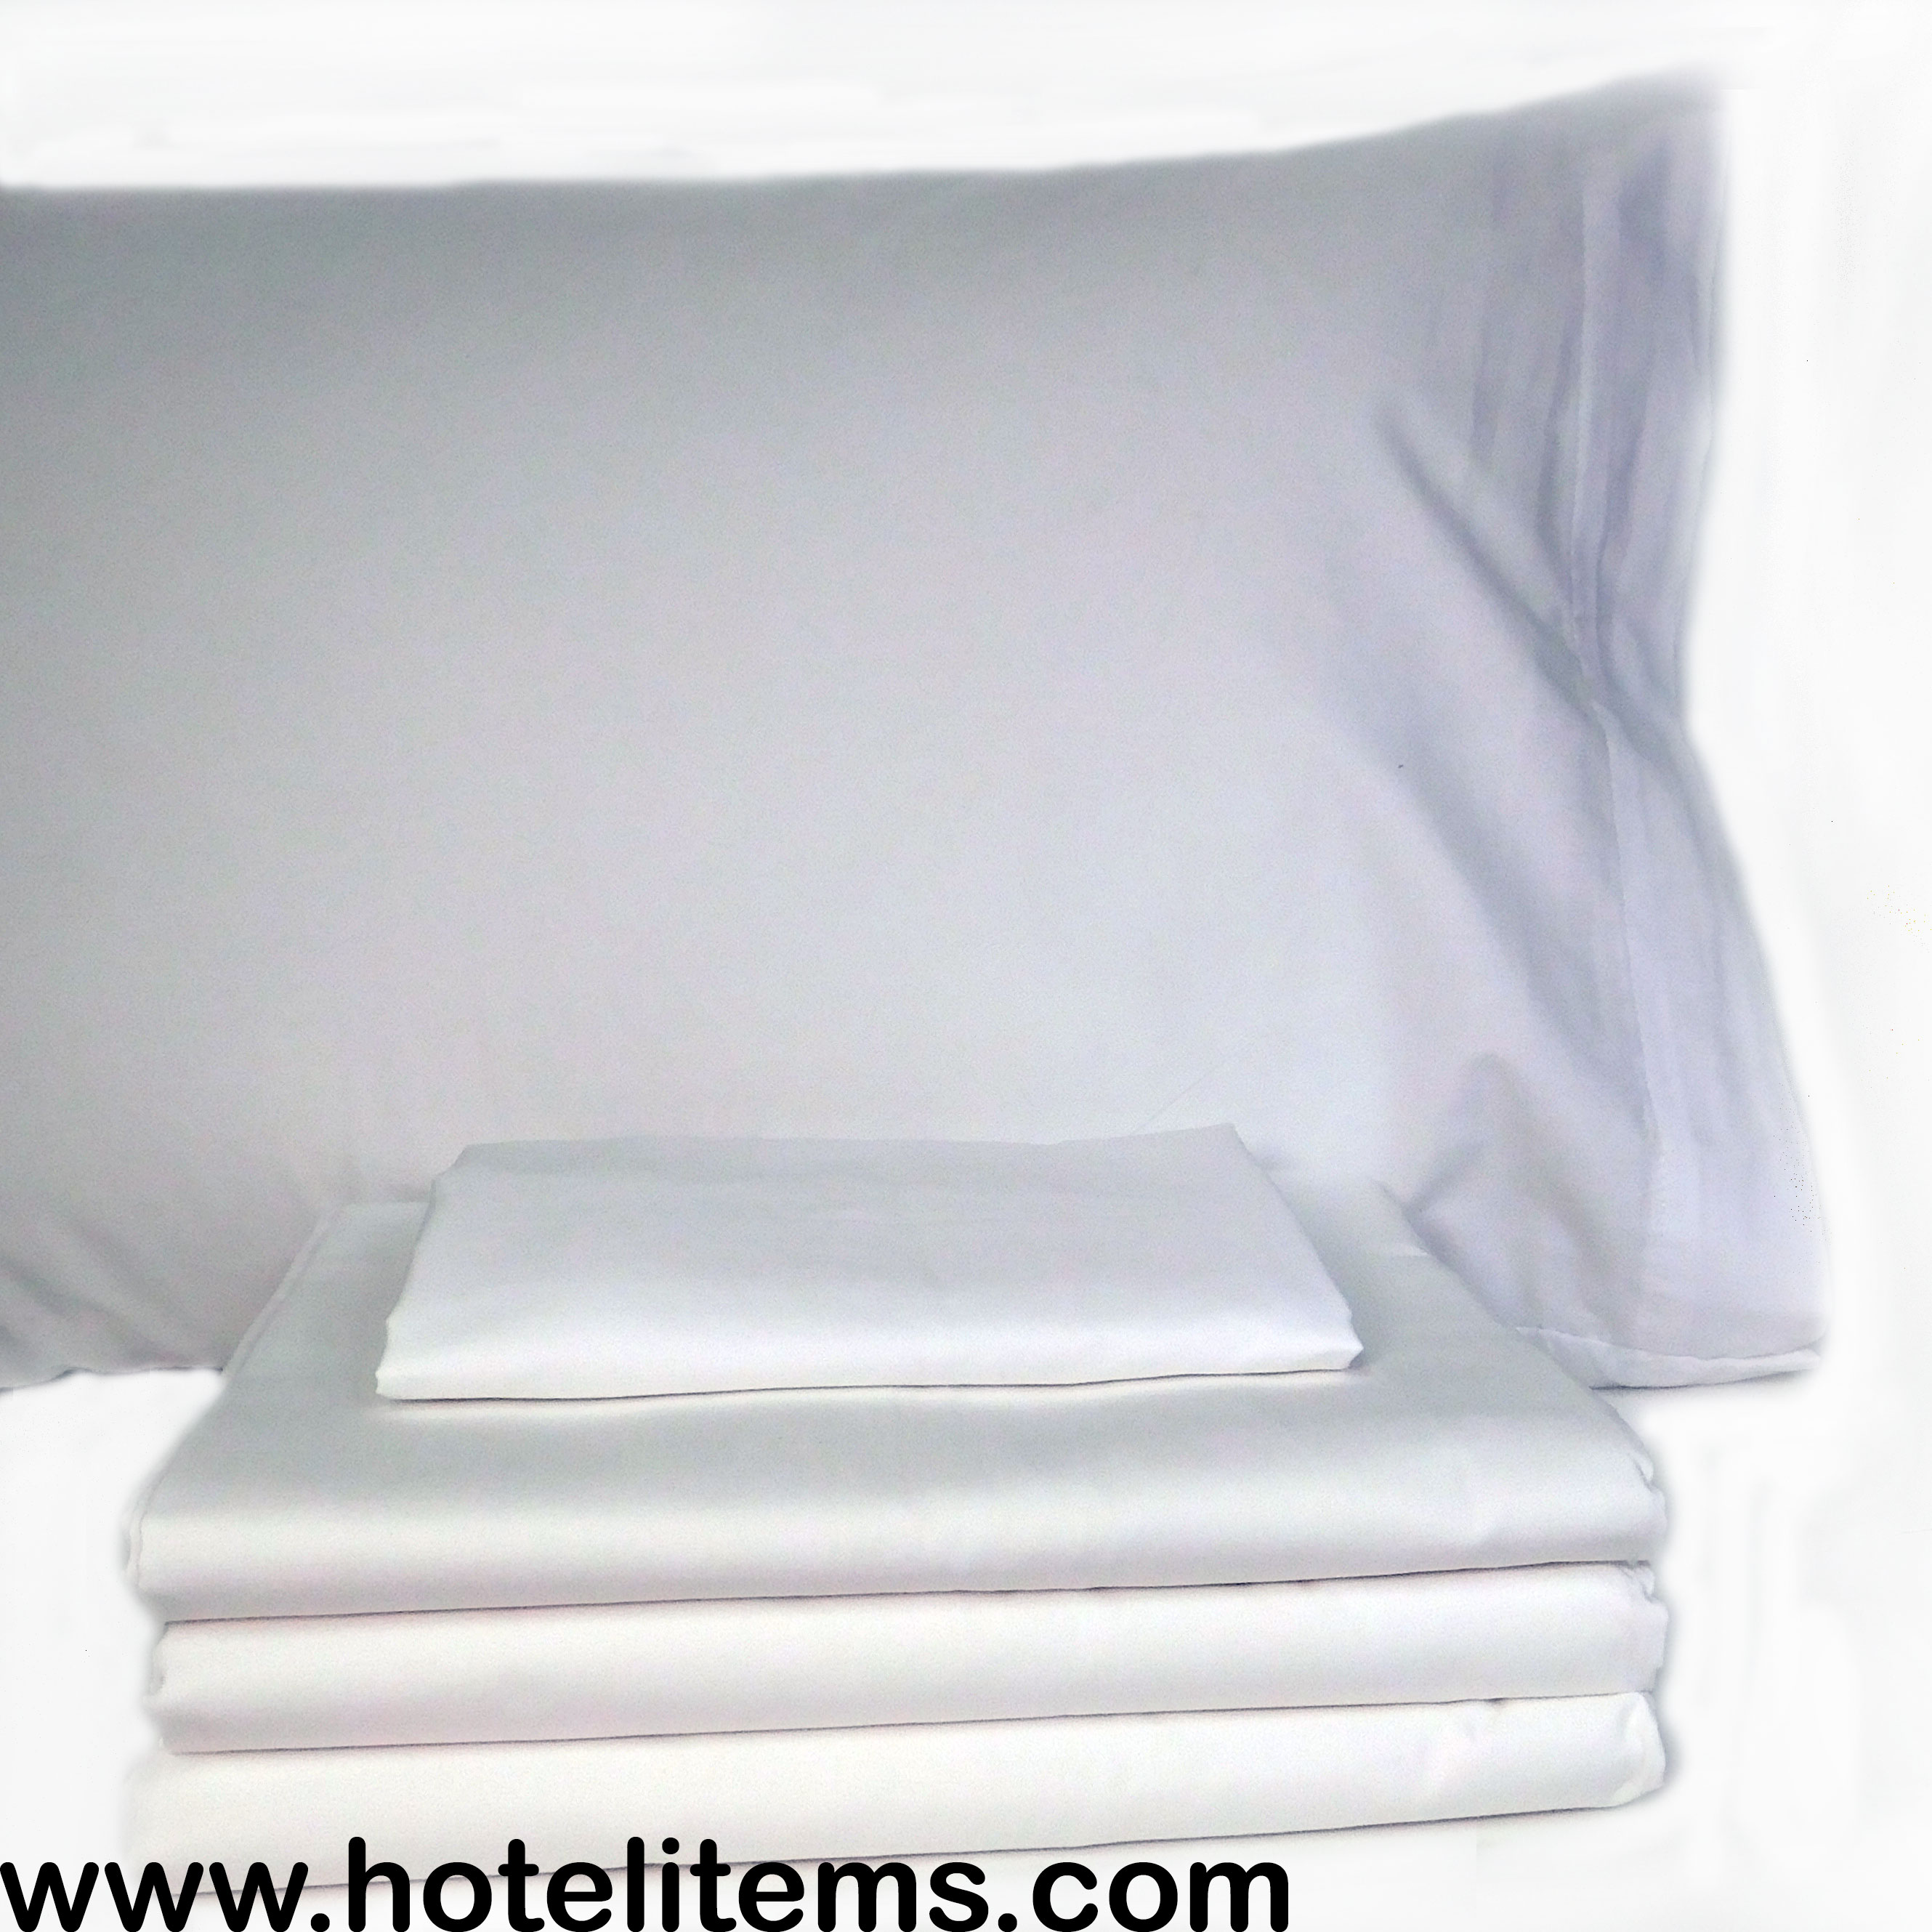 4 new 66x104 white t-180 twin size hotel flat sheet premium resort hotel  spa 